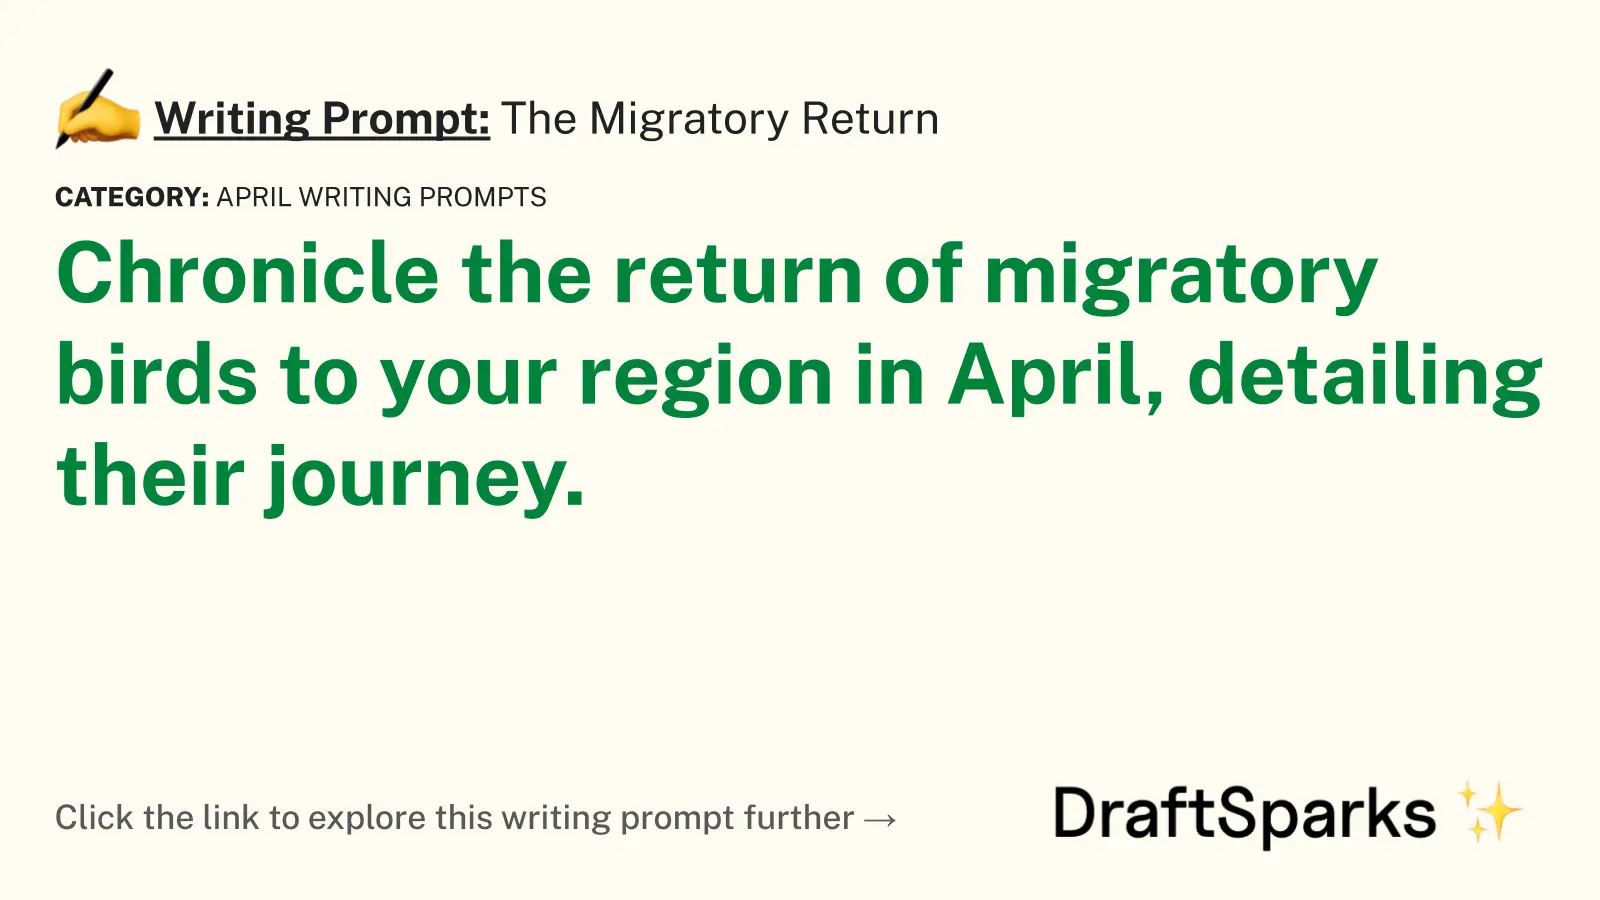 The Migratory Return